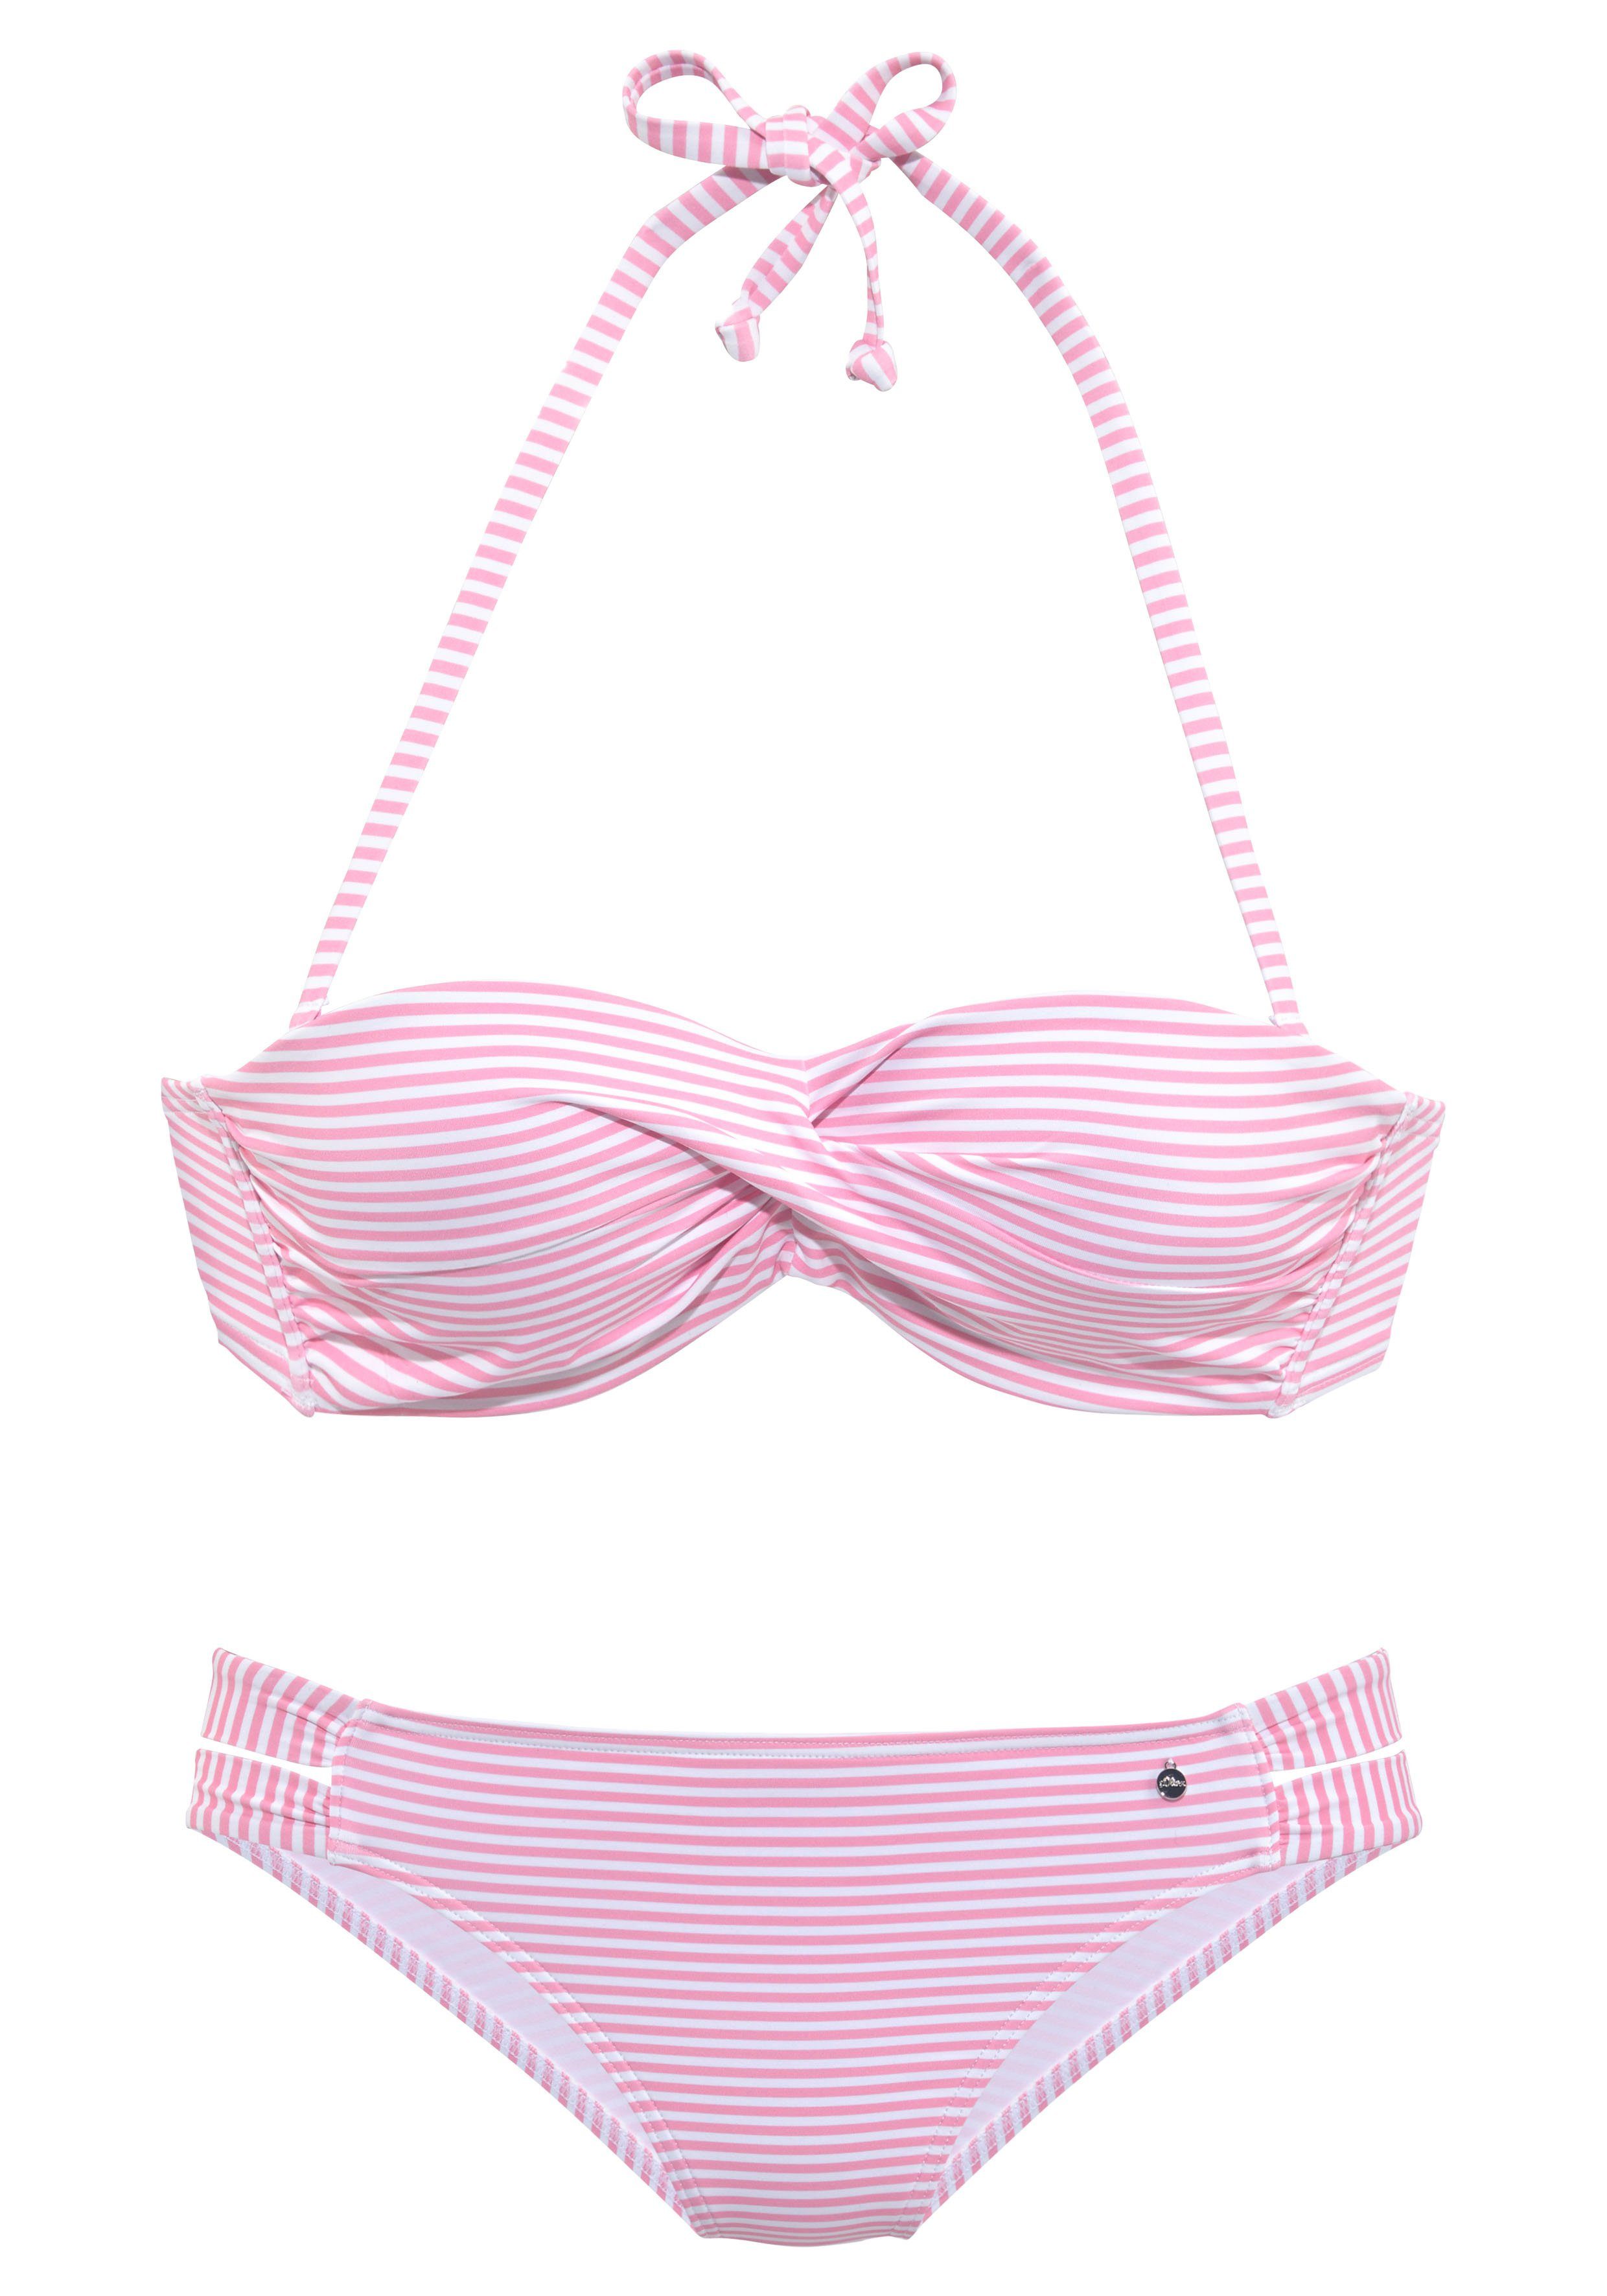 Bügel-Bandeau-Bikini s.Oliver rosé-weiß in Optik getwisteter